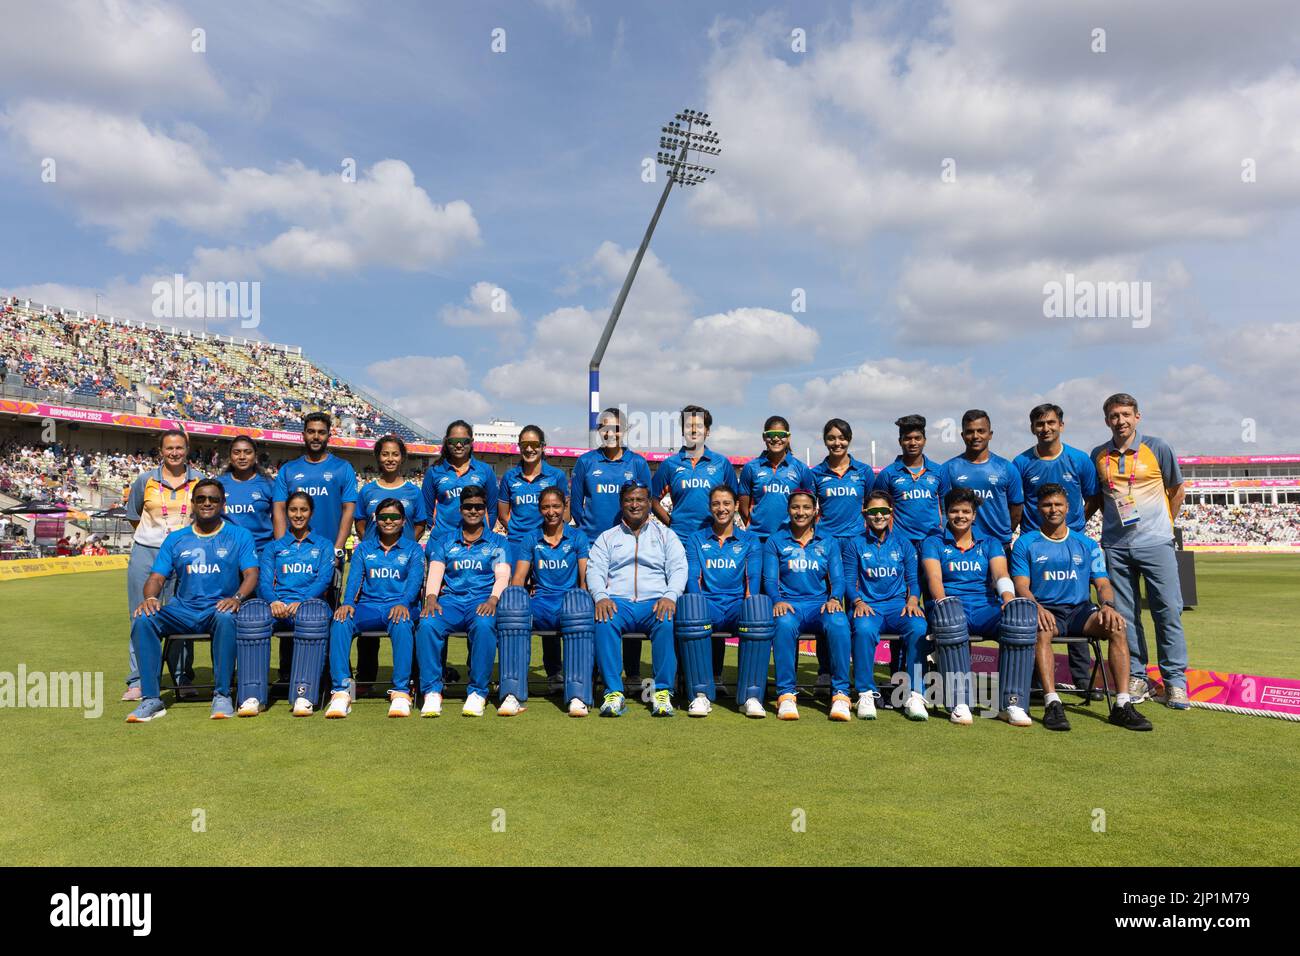 06-8-22 - The Women’s Indian Cricket Team at Edgbaston Cricket Ground during the Birmingham 2022 Commonwealth Games in Birmingham. Stock Photo